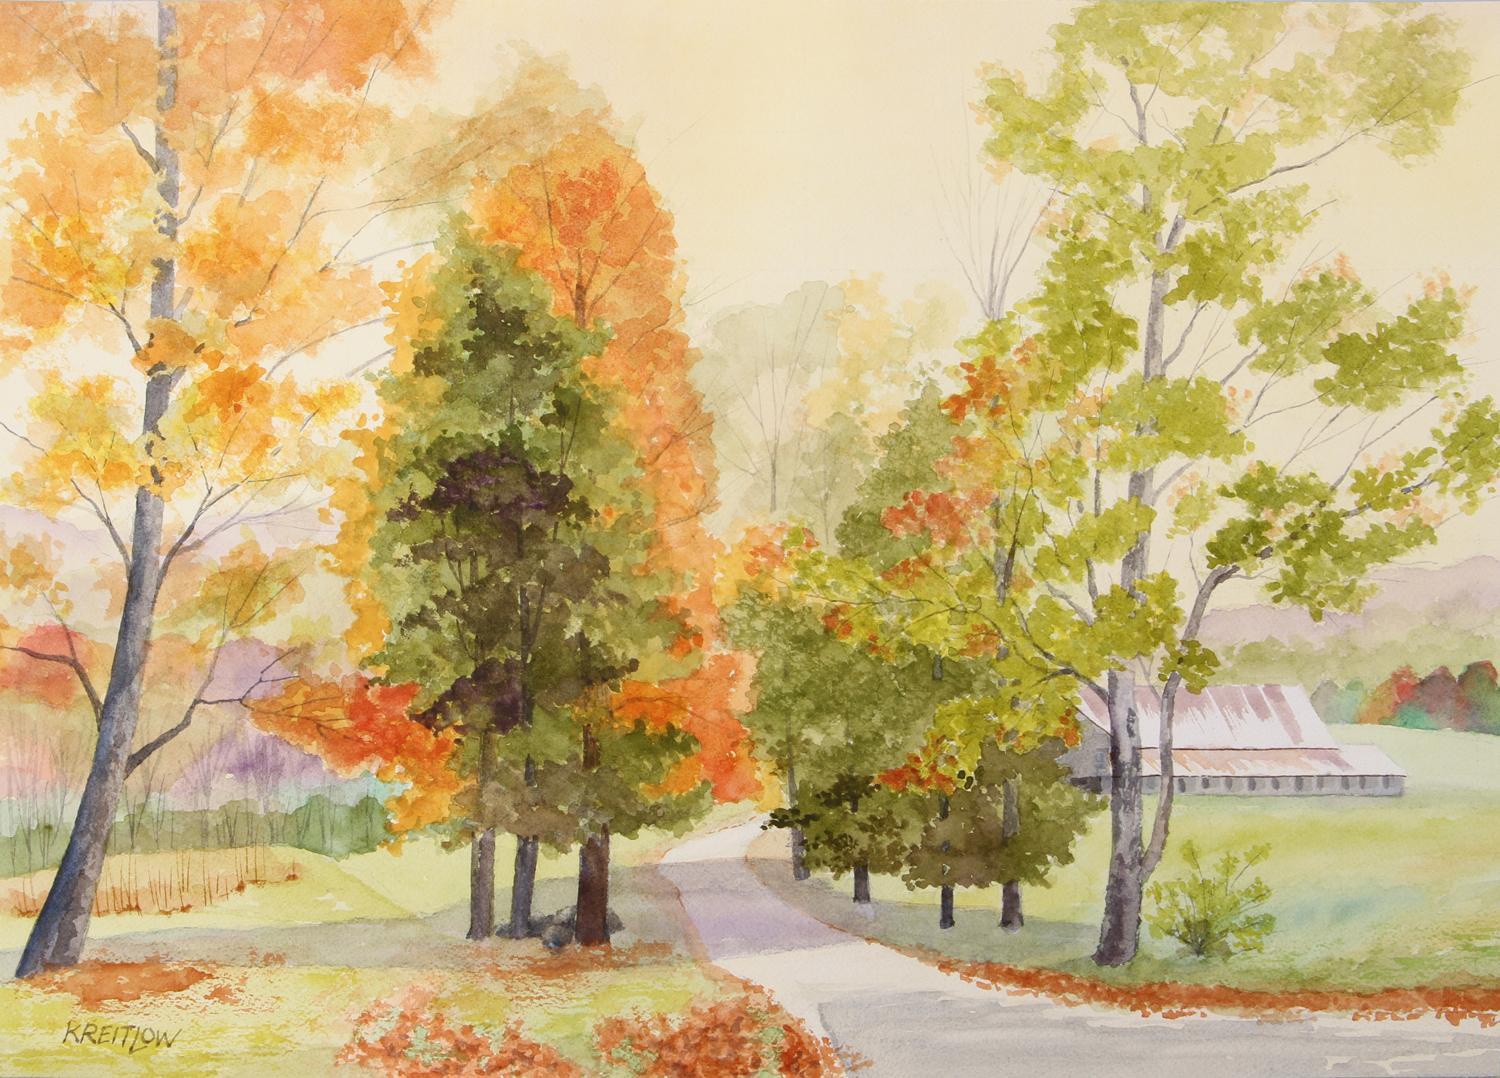 Bill Kreitlow Landscape Art - Coolidge Farm Road, Original Painting